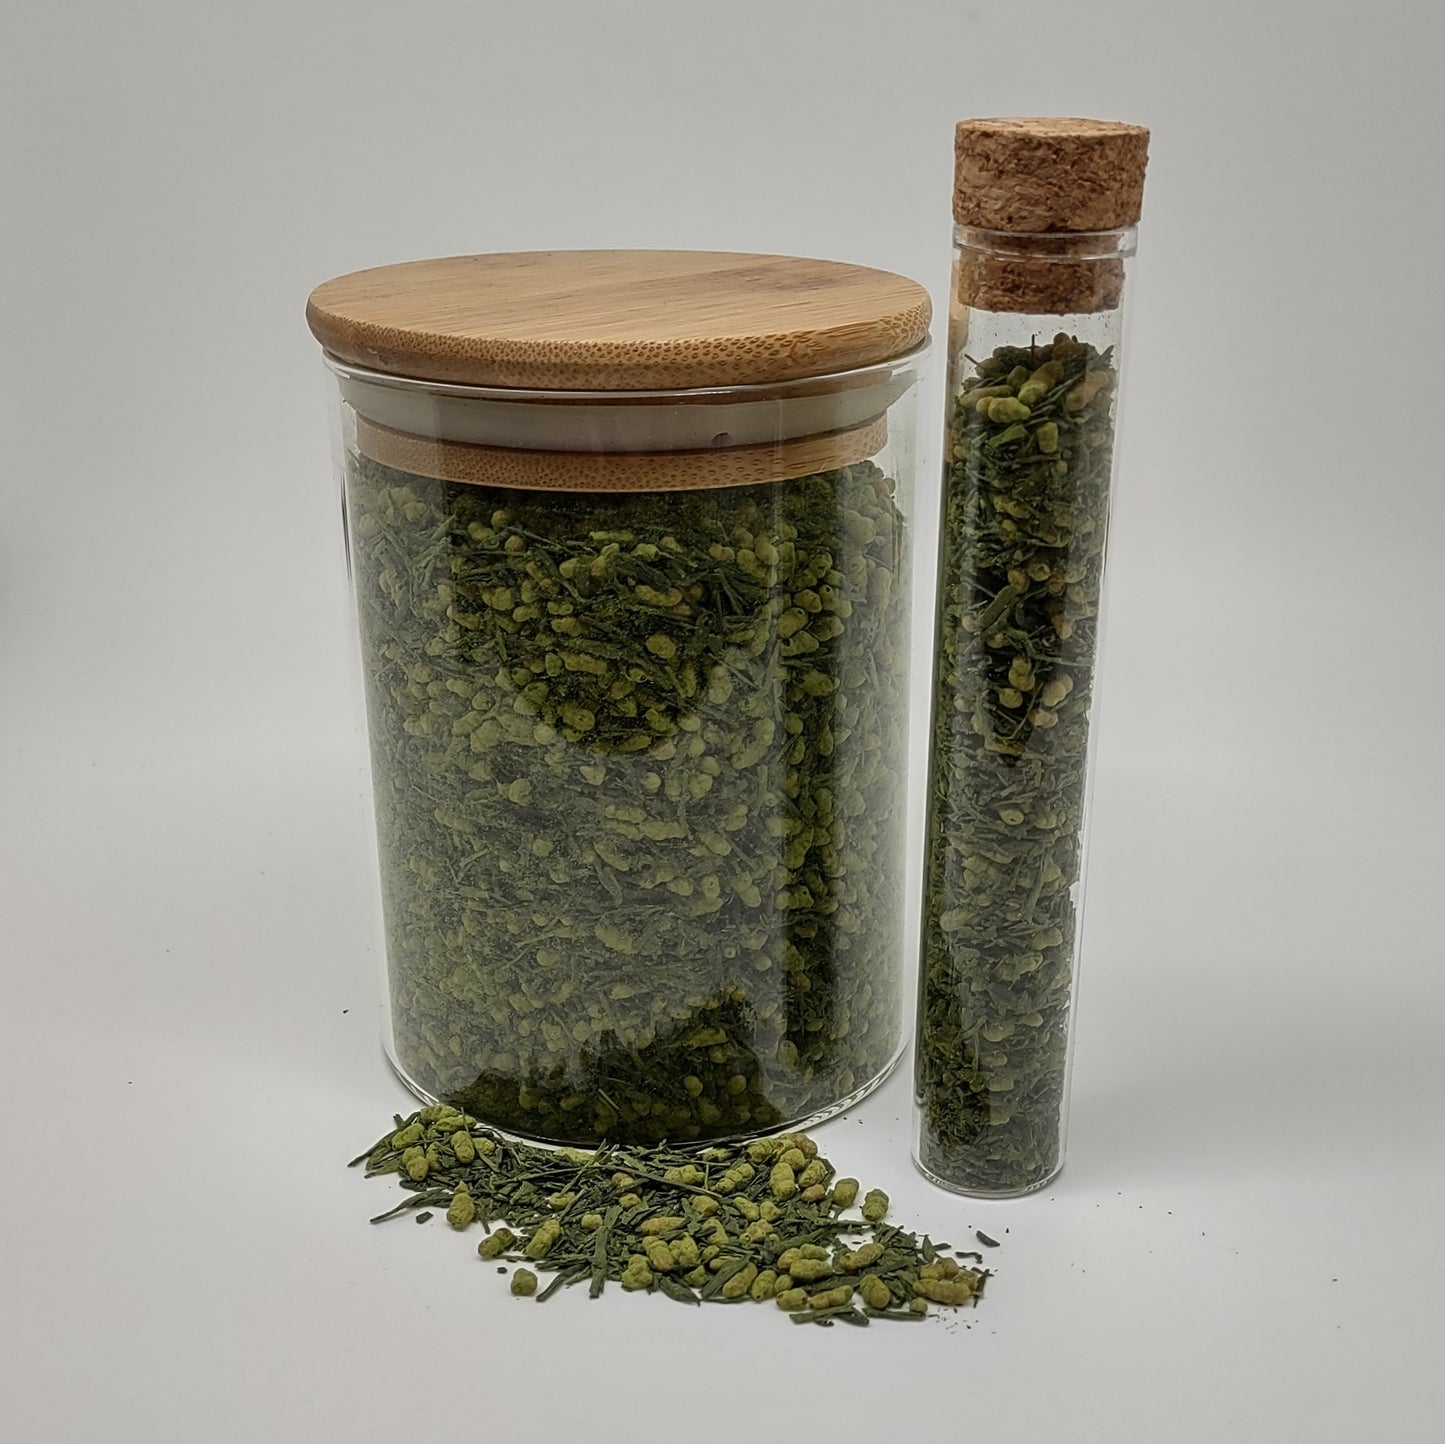 Organic Genmaicha Matcha Green Tea